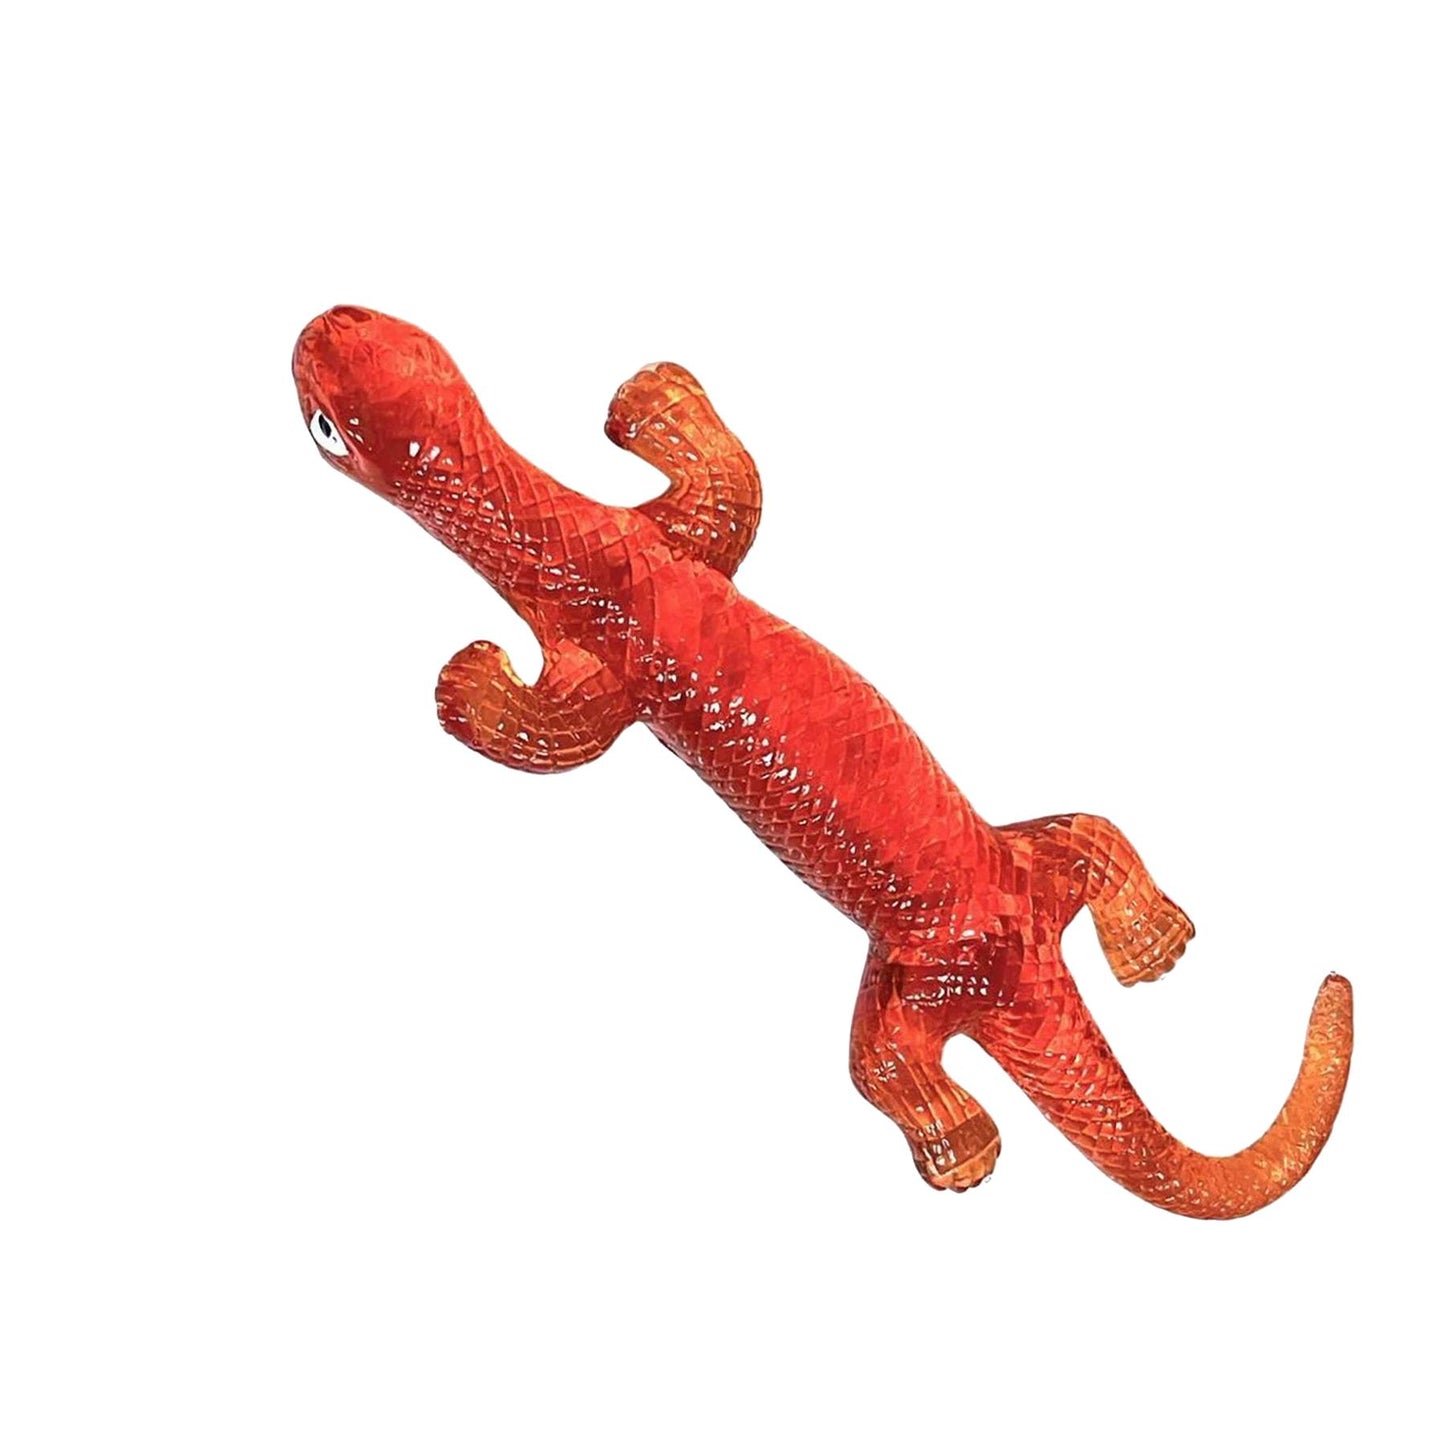 Stretchy Animal Sensory Toy by The Magic Toy Shop - UKBuyZone